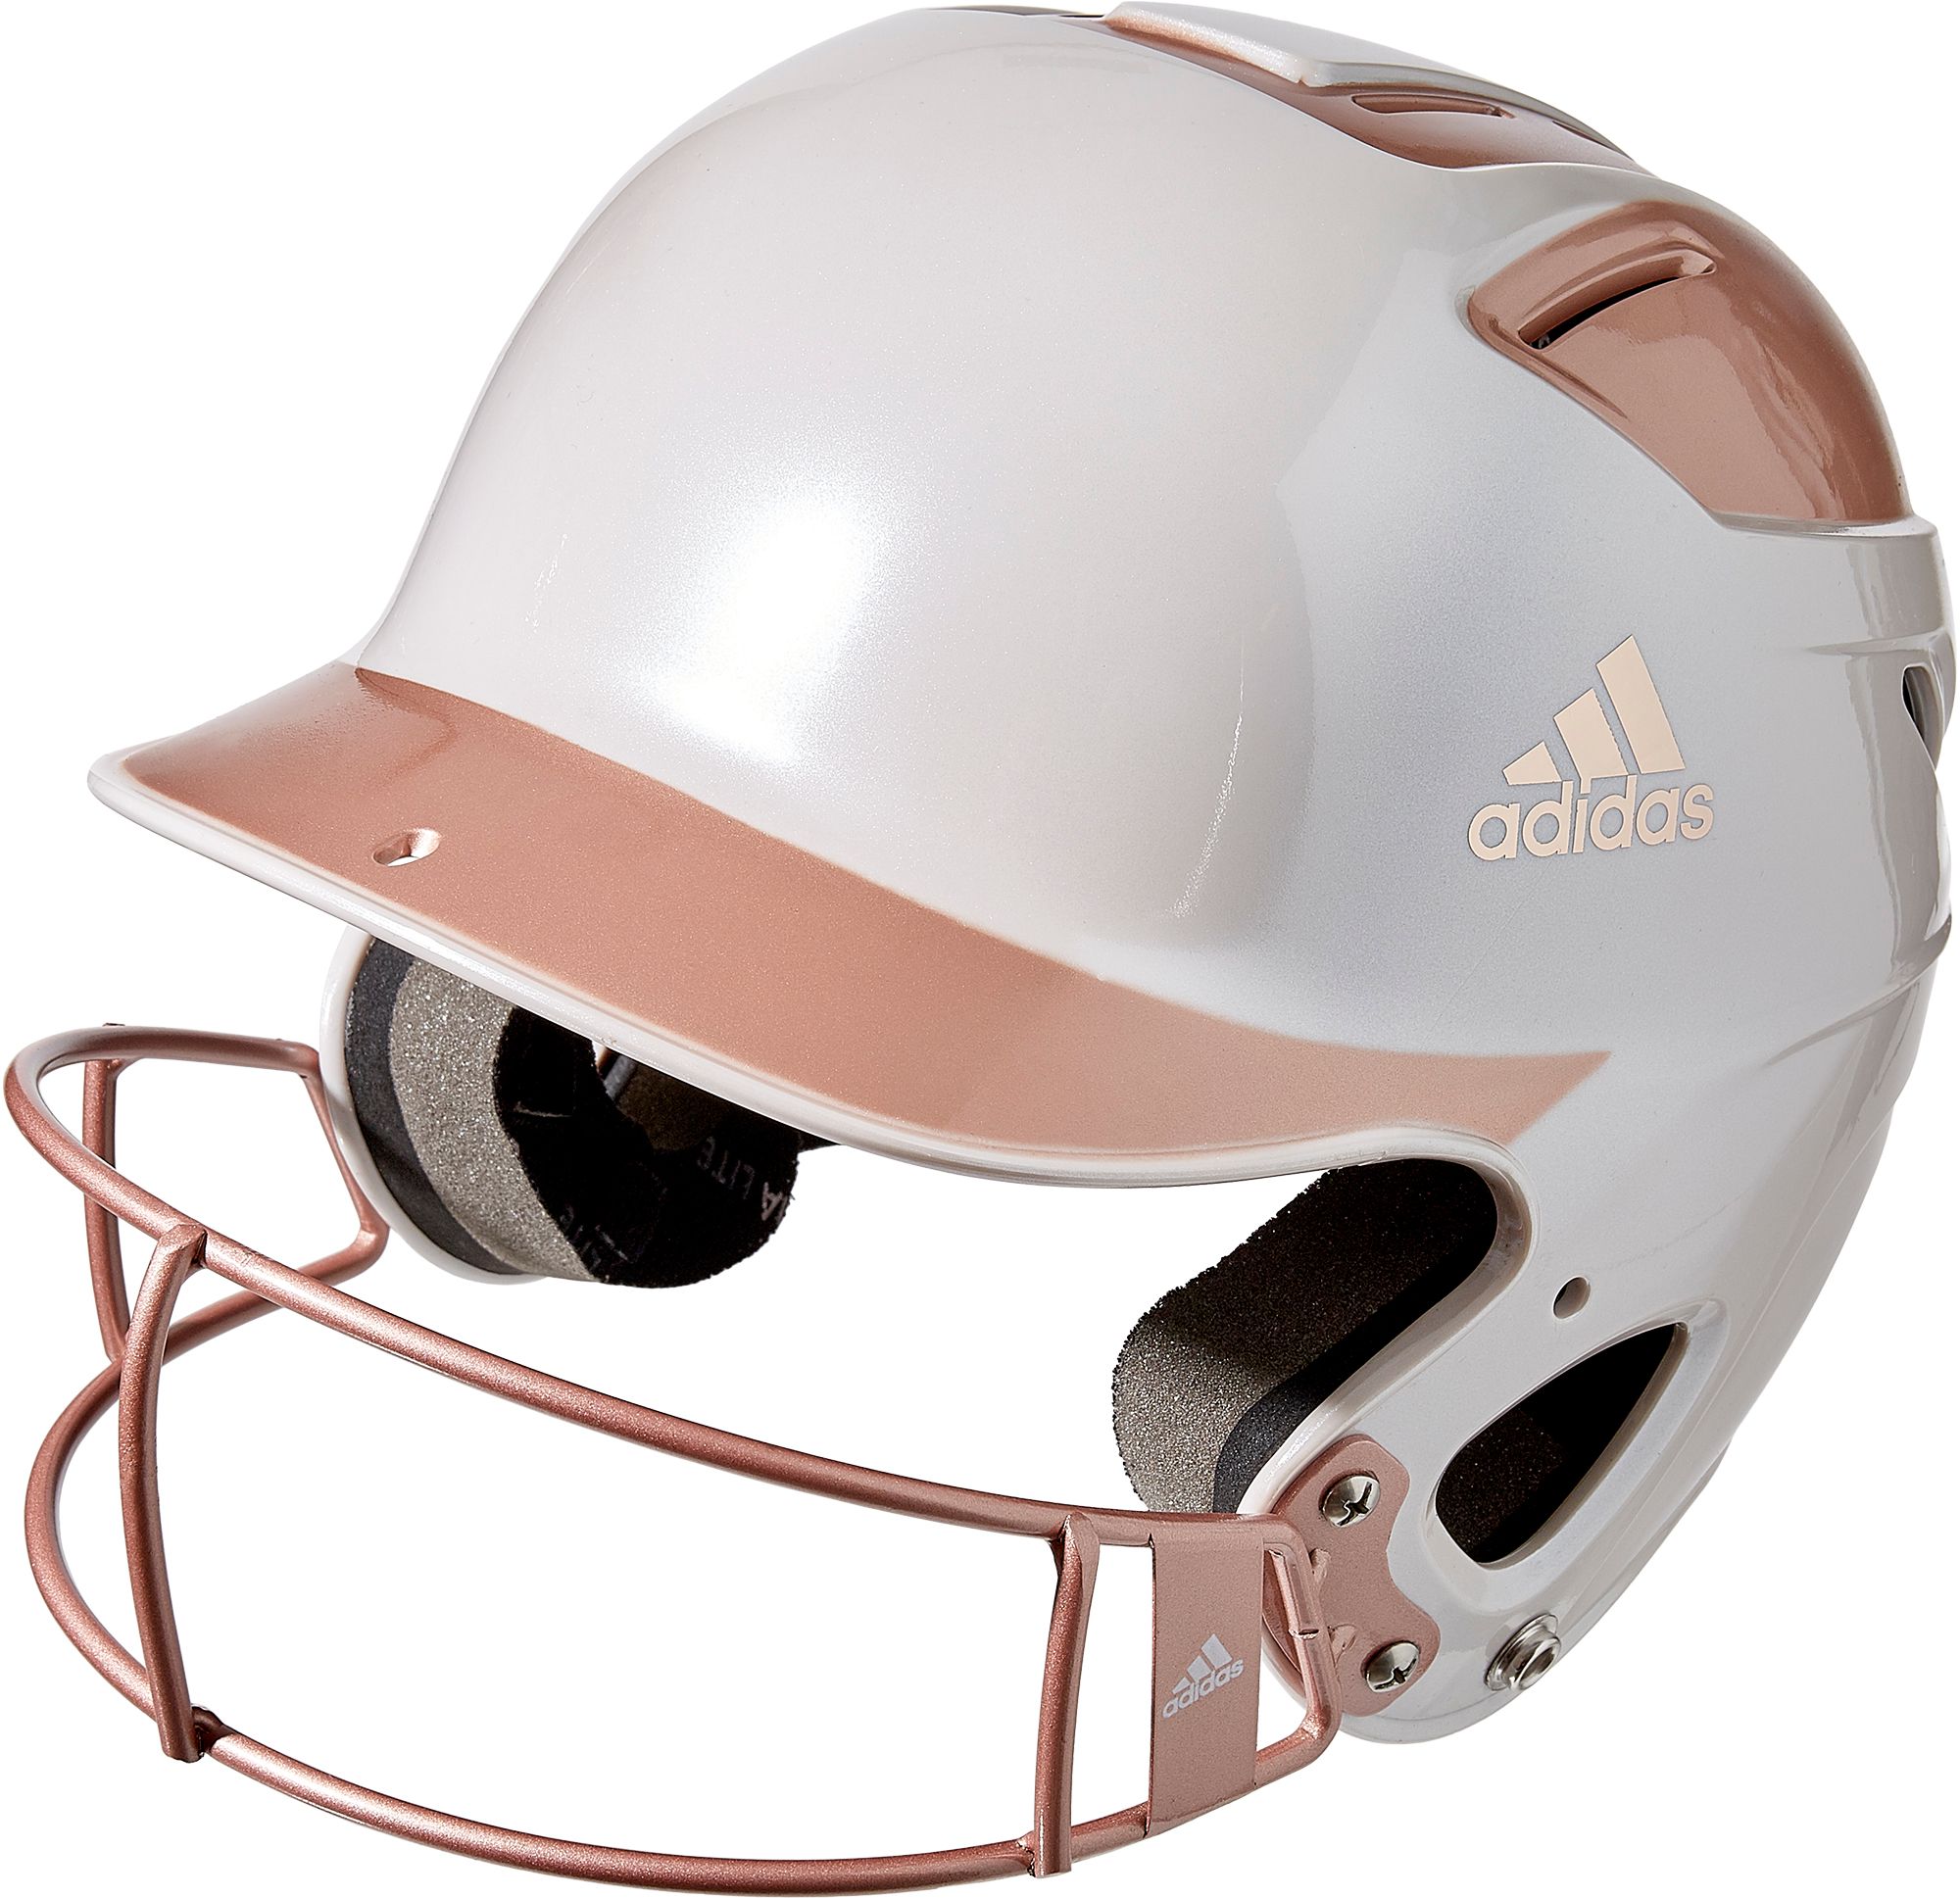 adidas youth softball helmet